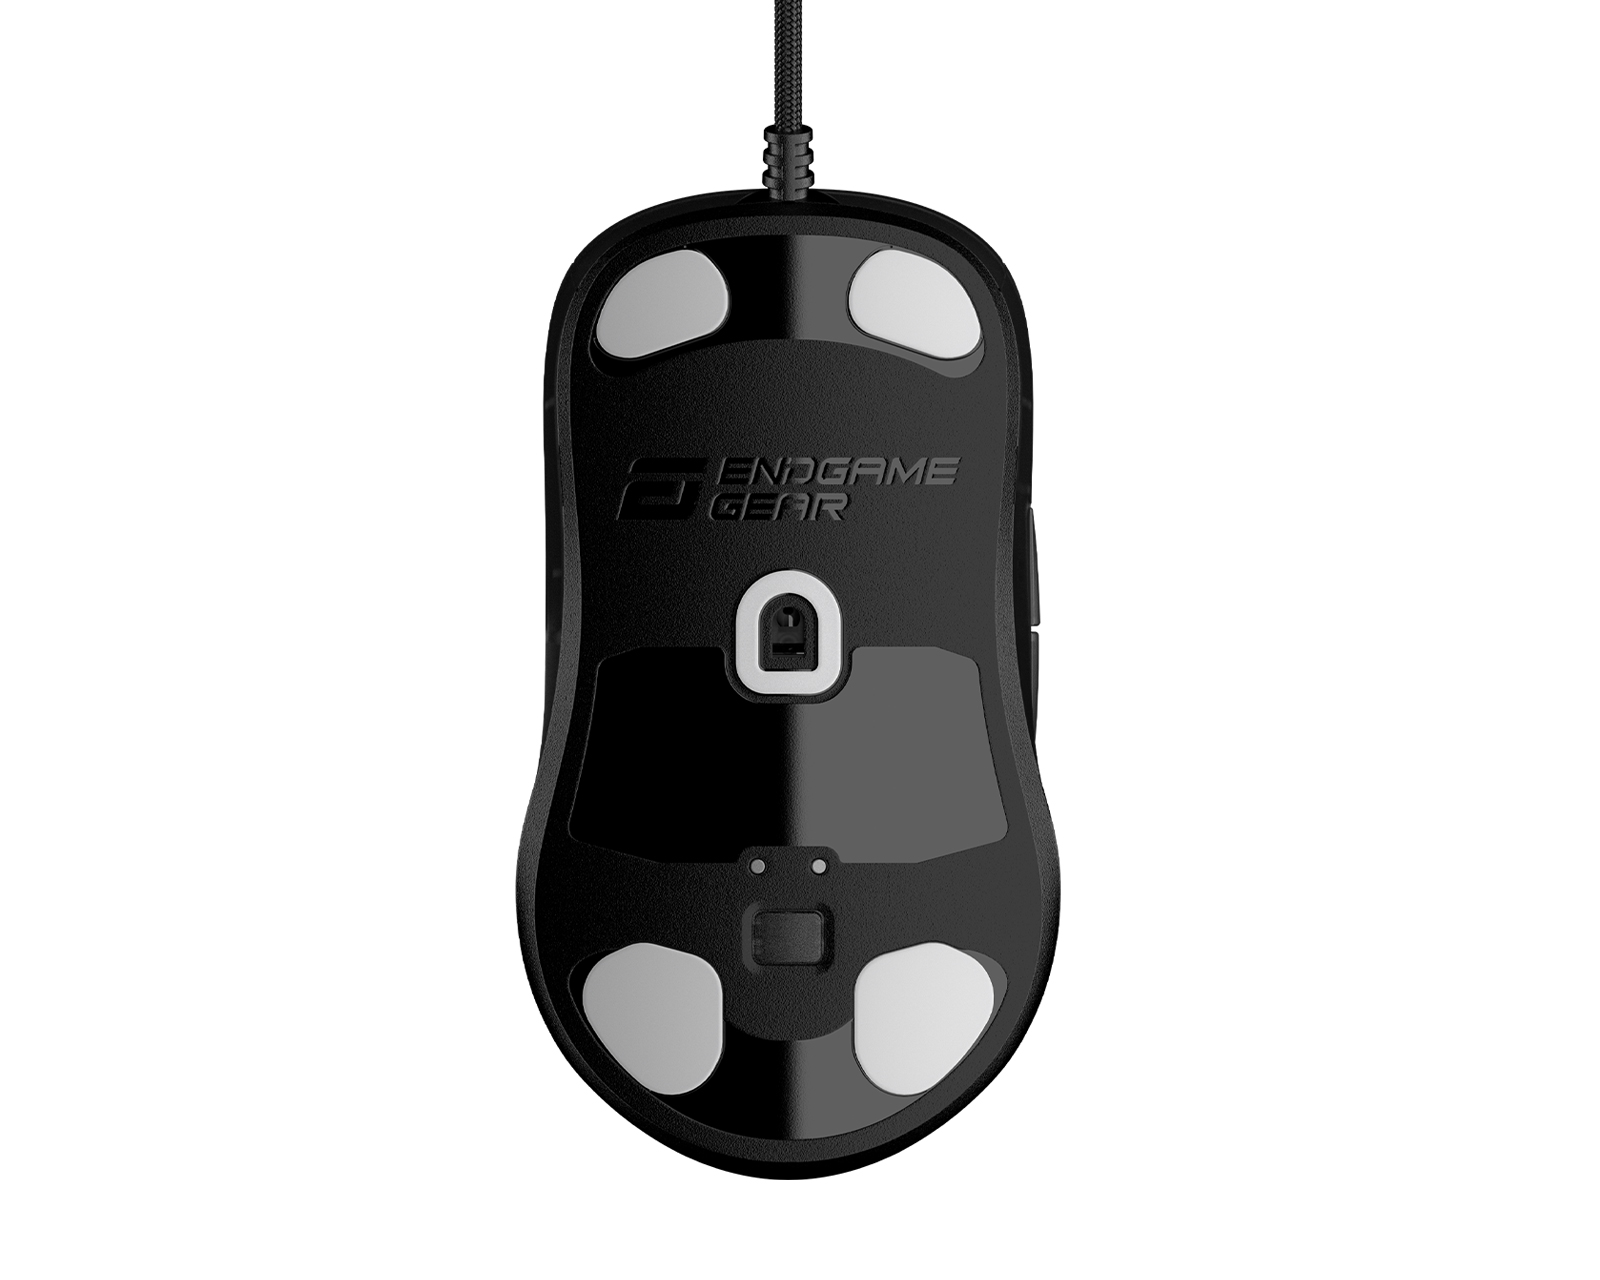 Buy Endgame Gear Xm1r Gaming Mouse Dark Frost At Us Maxgaming Com